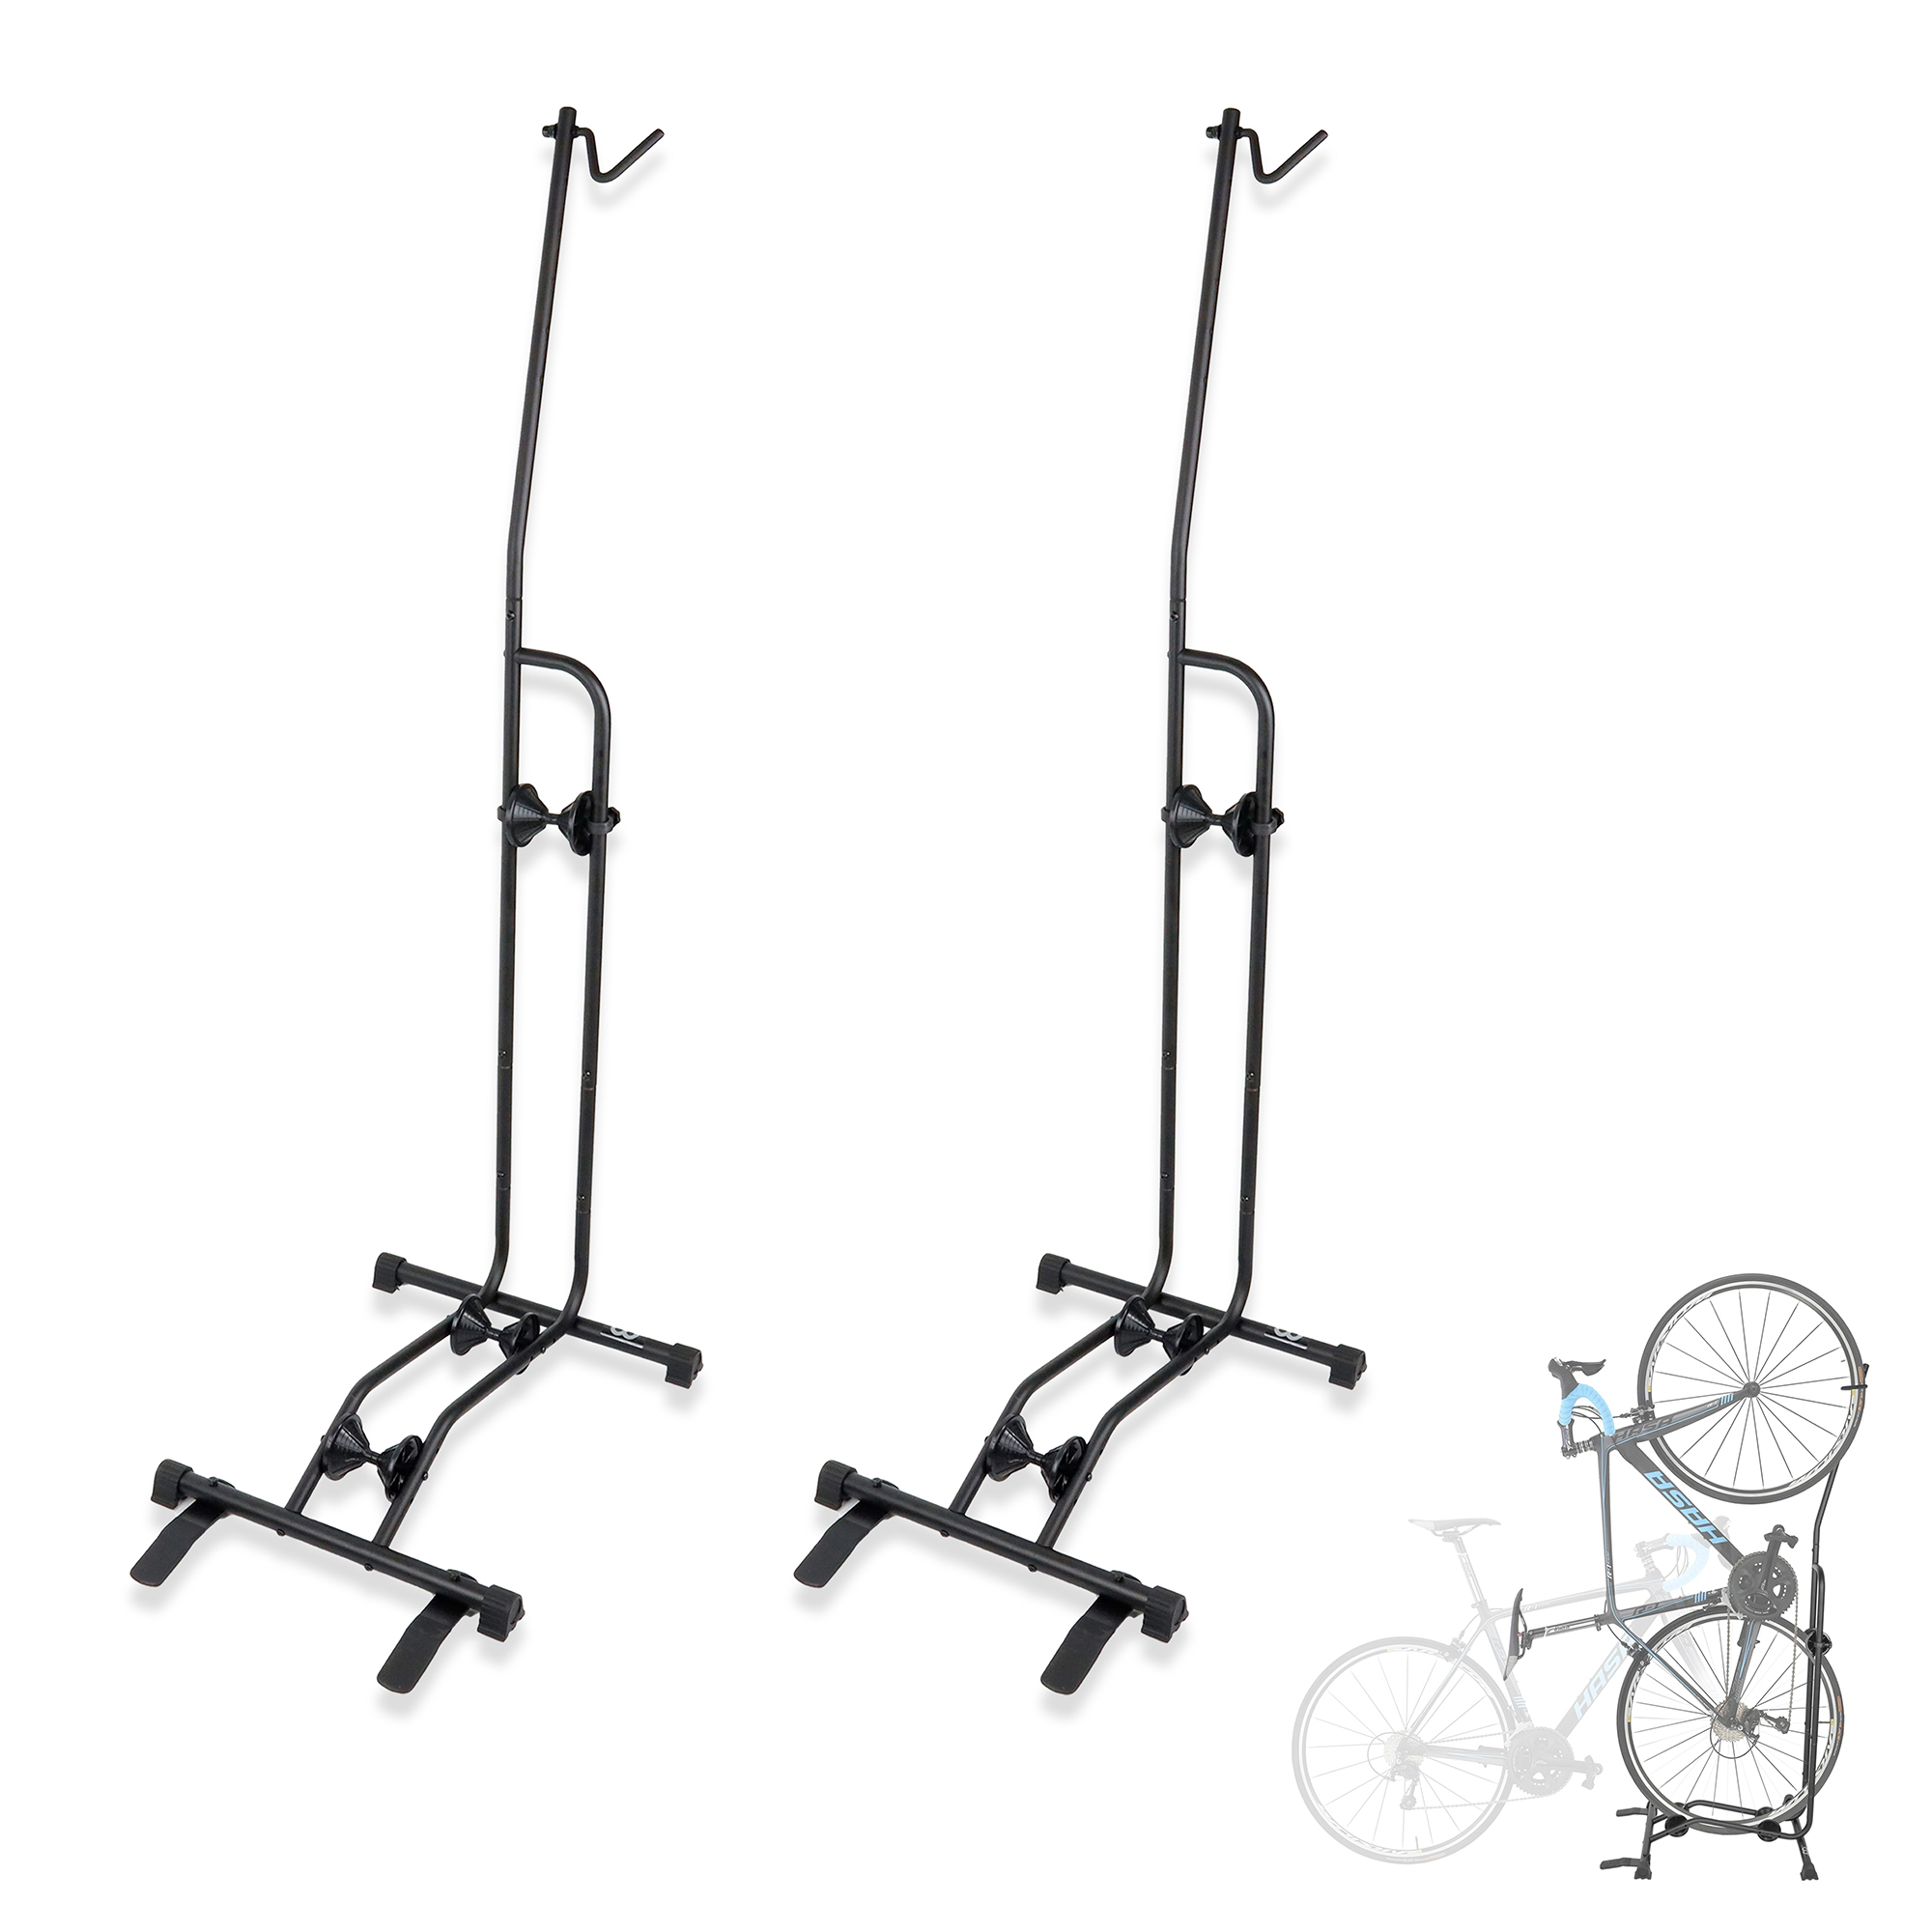 CD Upright Bike Stand - Vertical & Horizontal Bicycle Floor Parking Rack - Safe & Secure - Store MTB Road Bikes in Garage or Home - 2 Pack